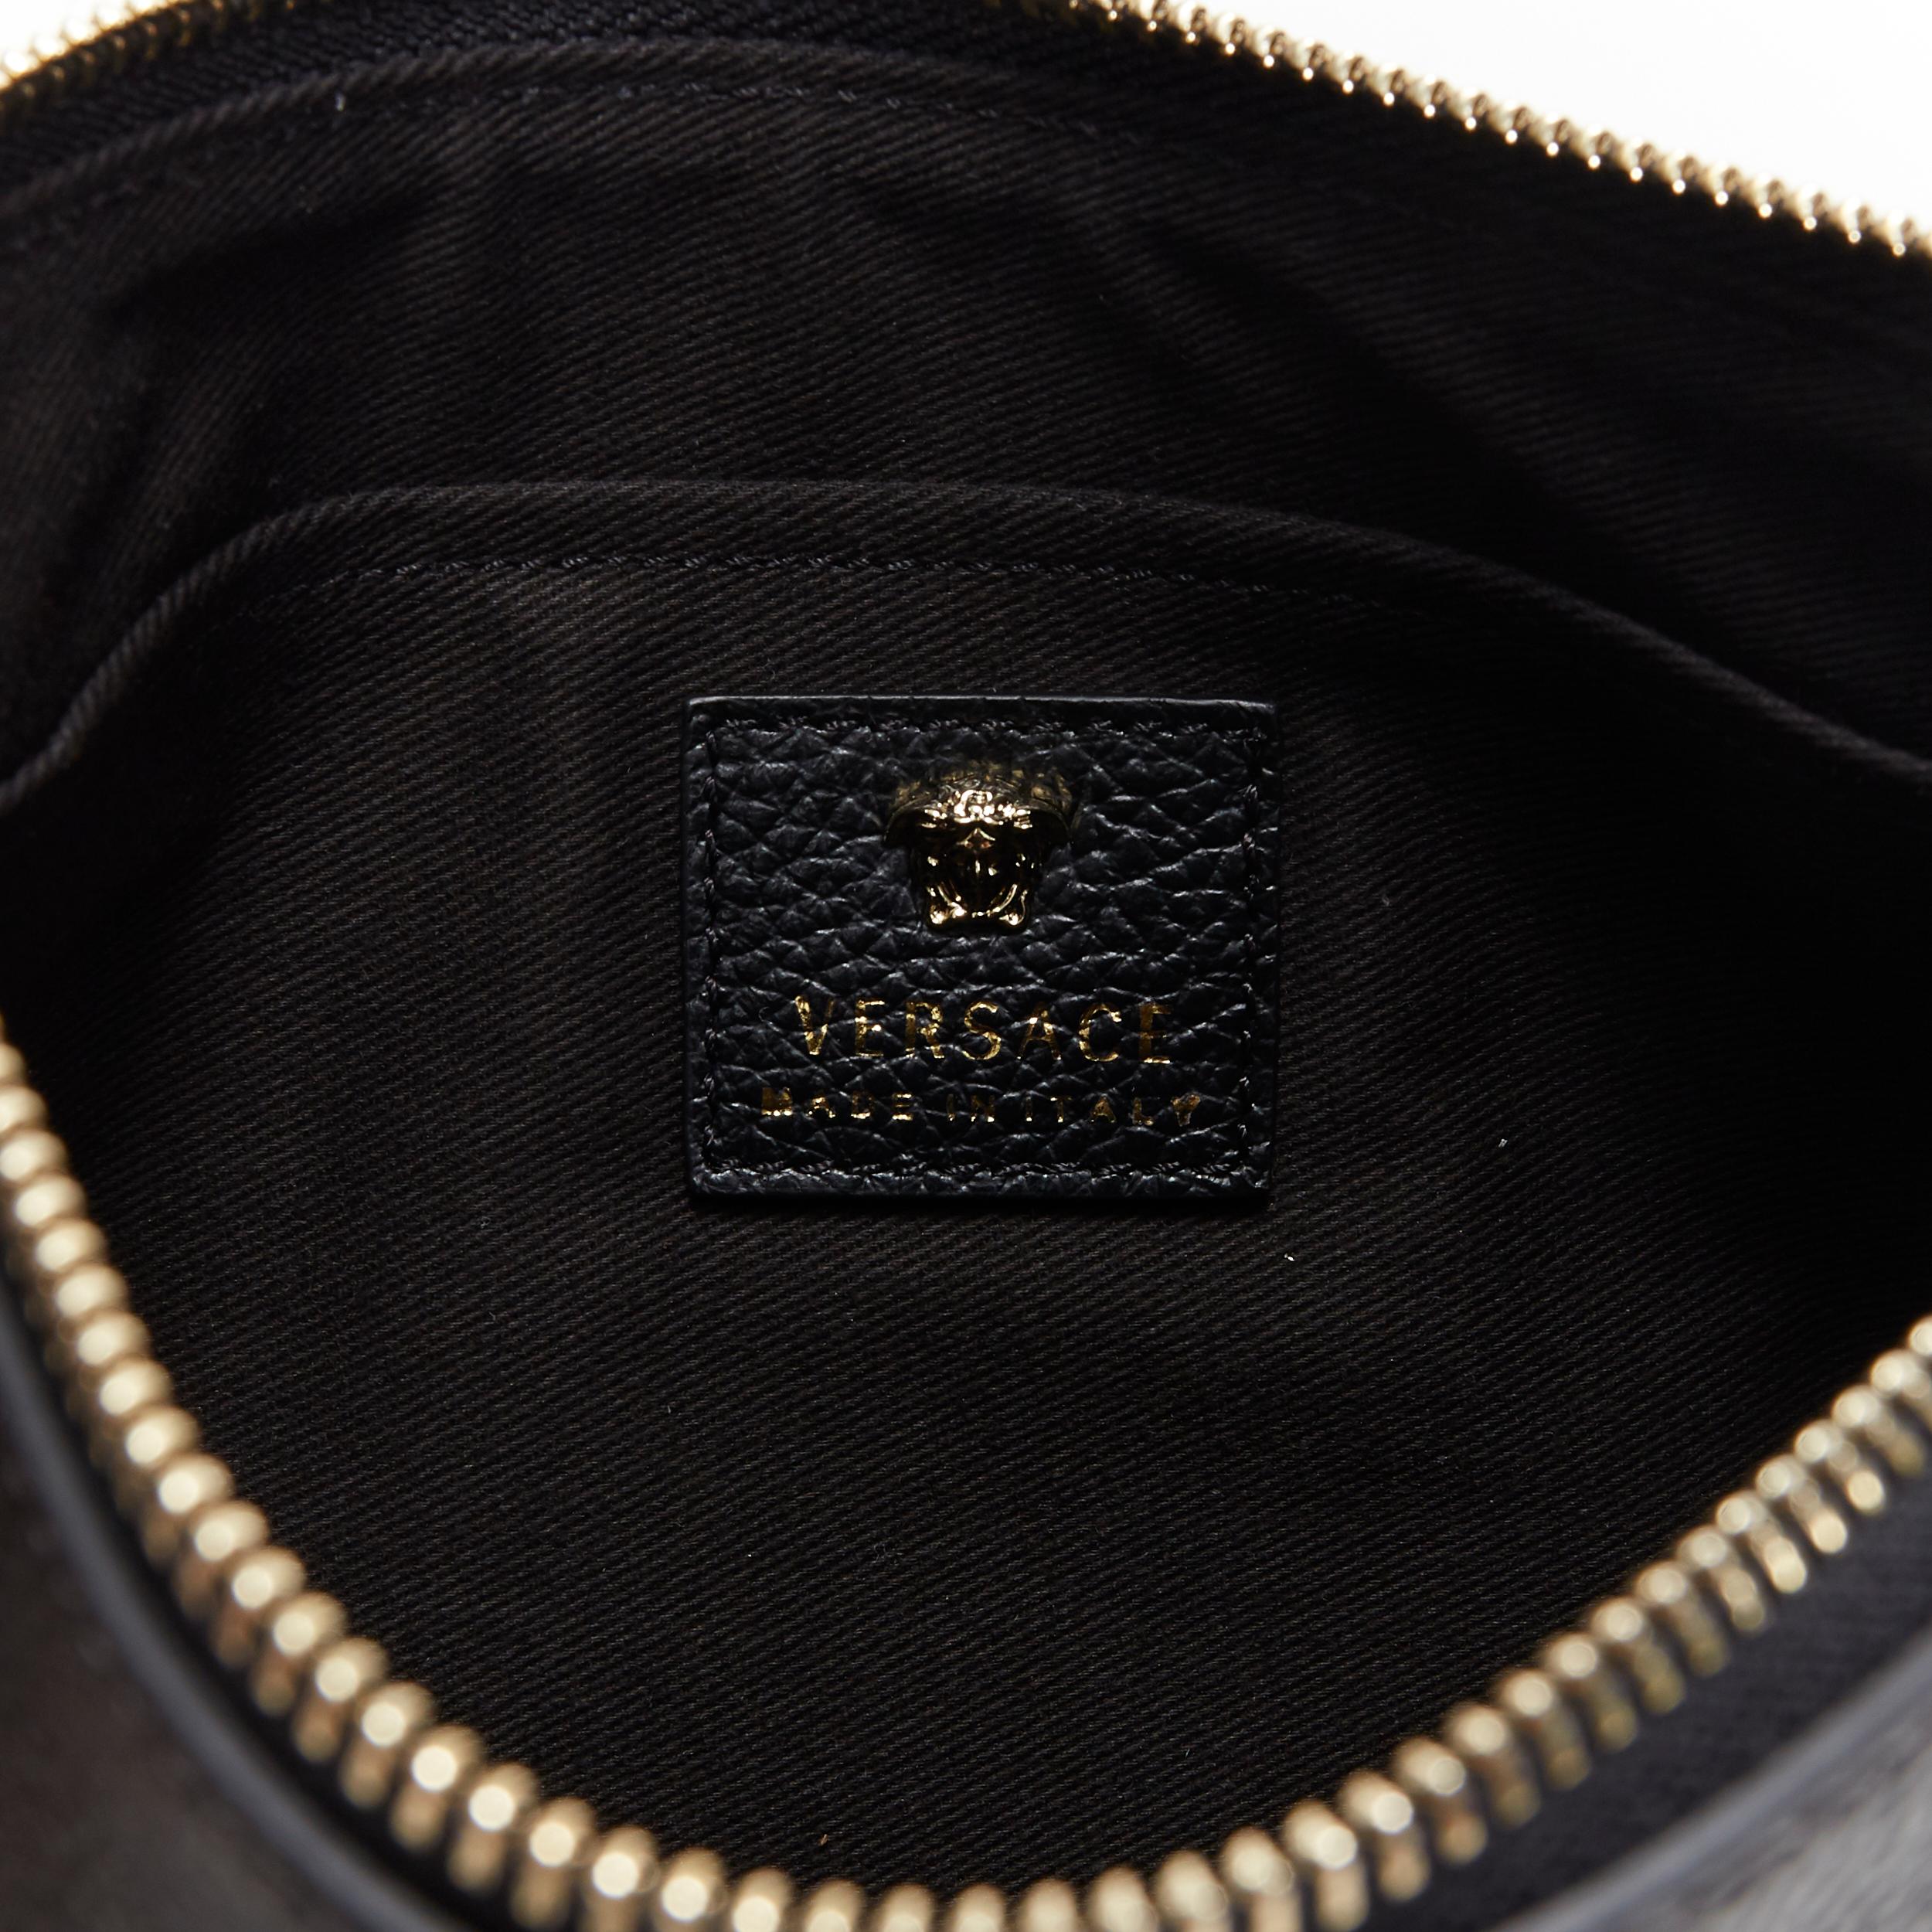 Women's new VERSACE Palazzo Medusa black pebble leather top zip wristlet clutch bag